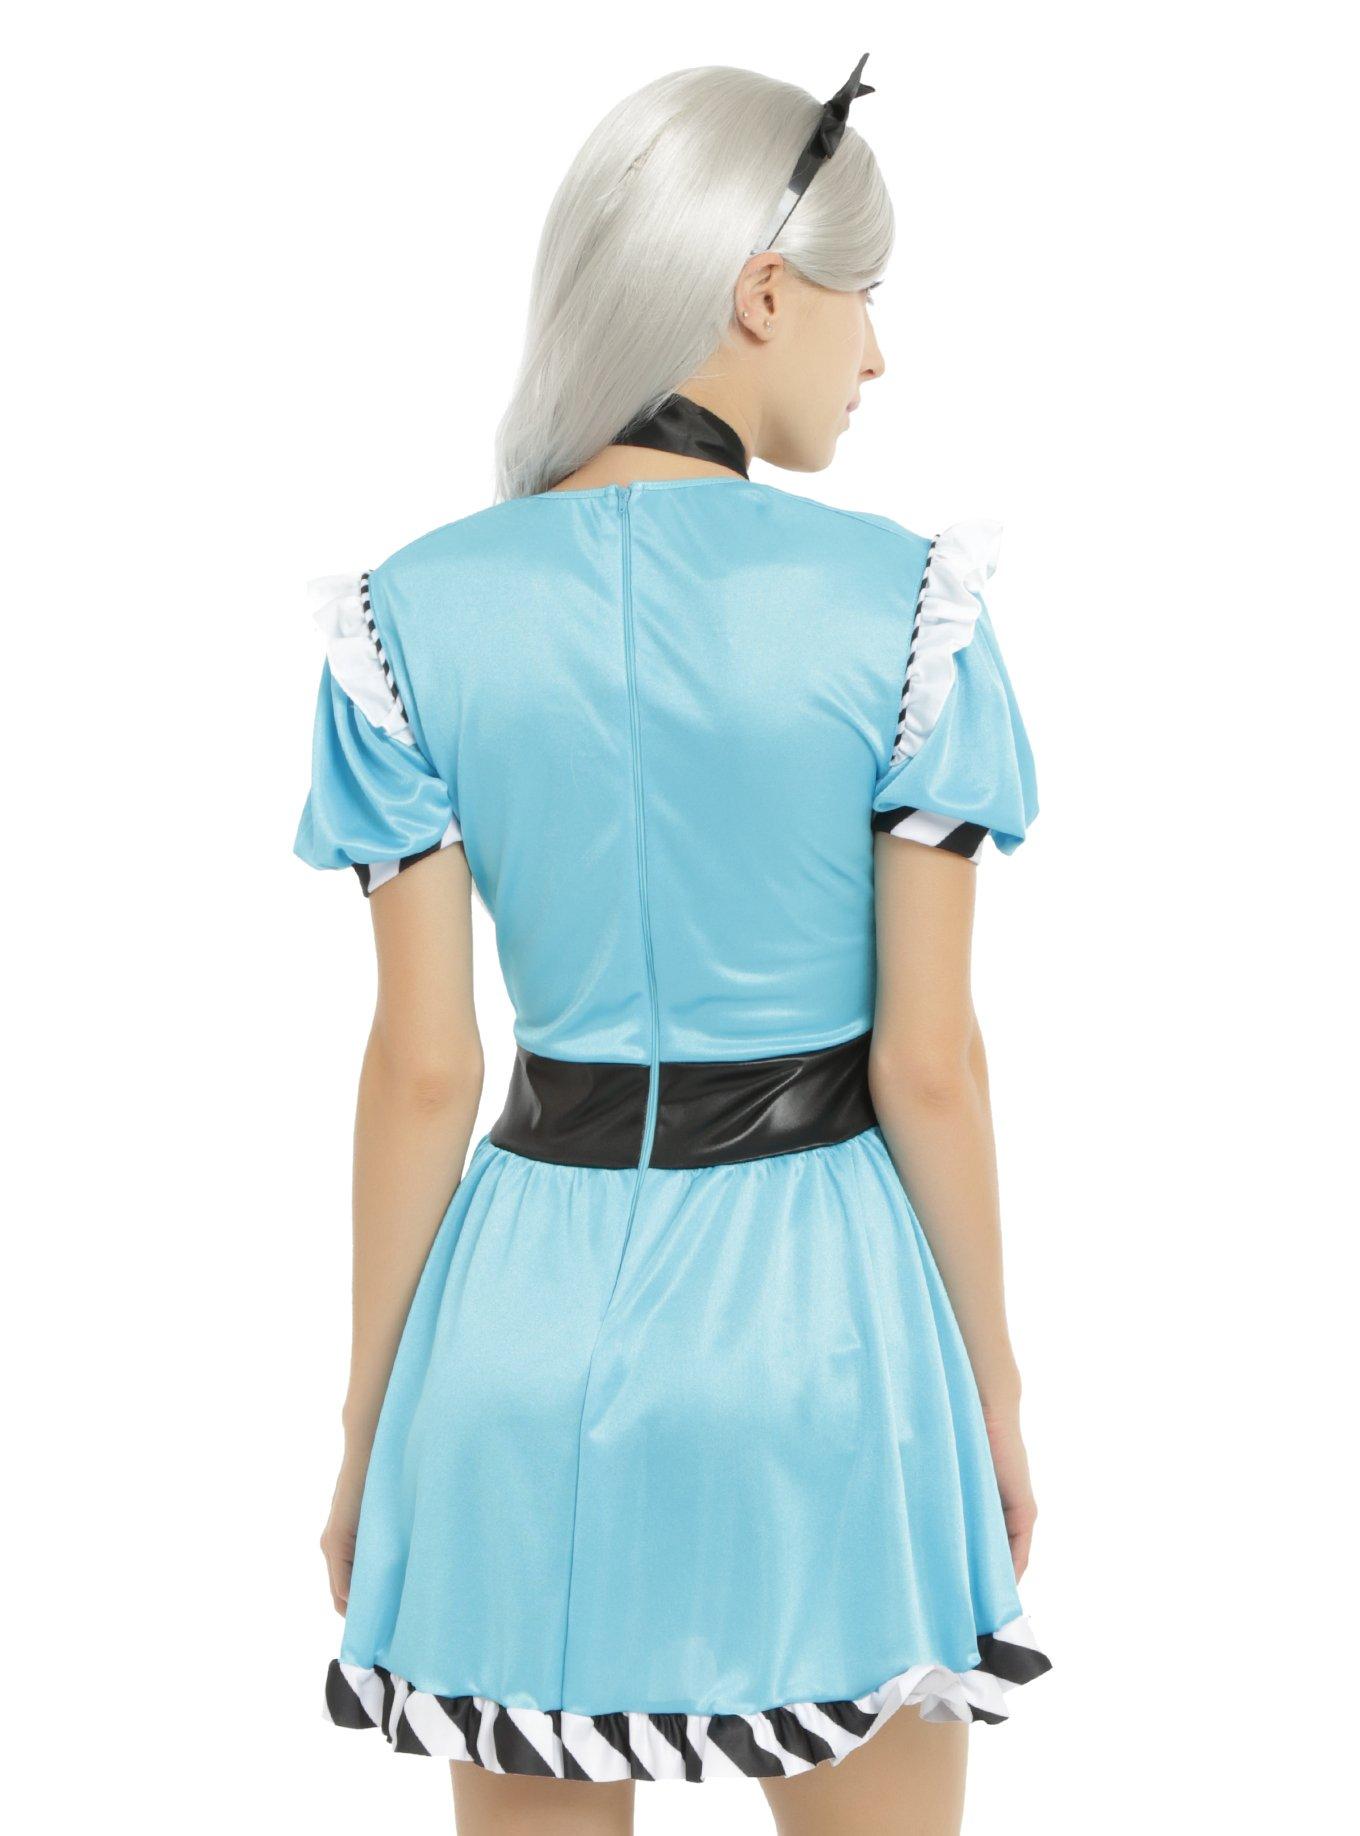 Storybook Alice Costume, BLUE, alternate